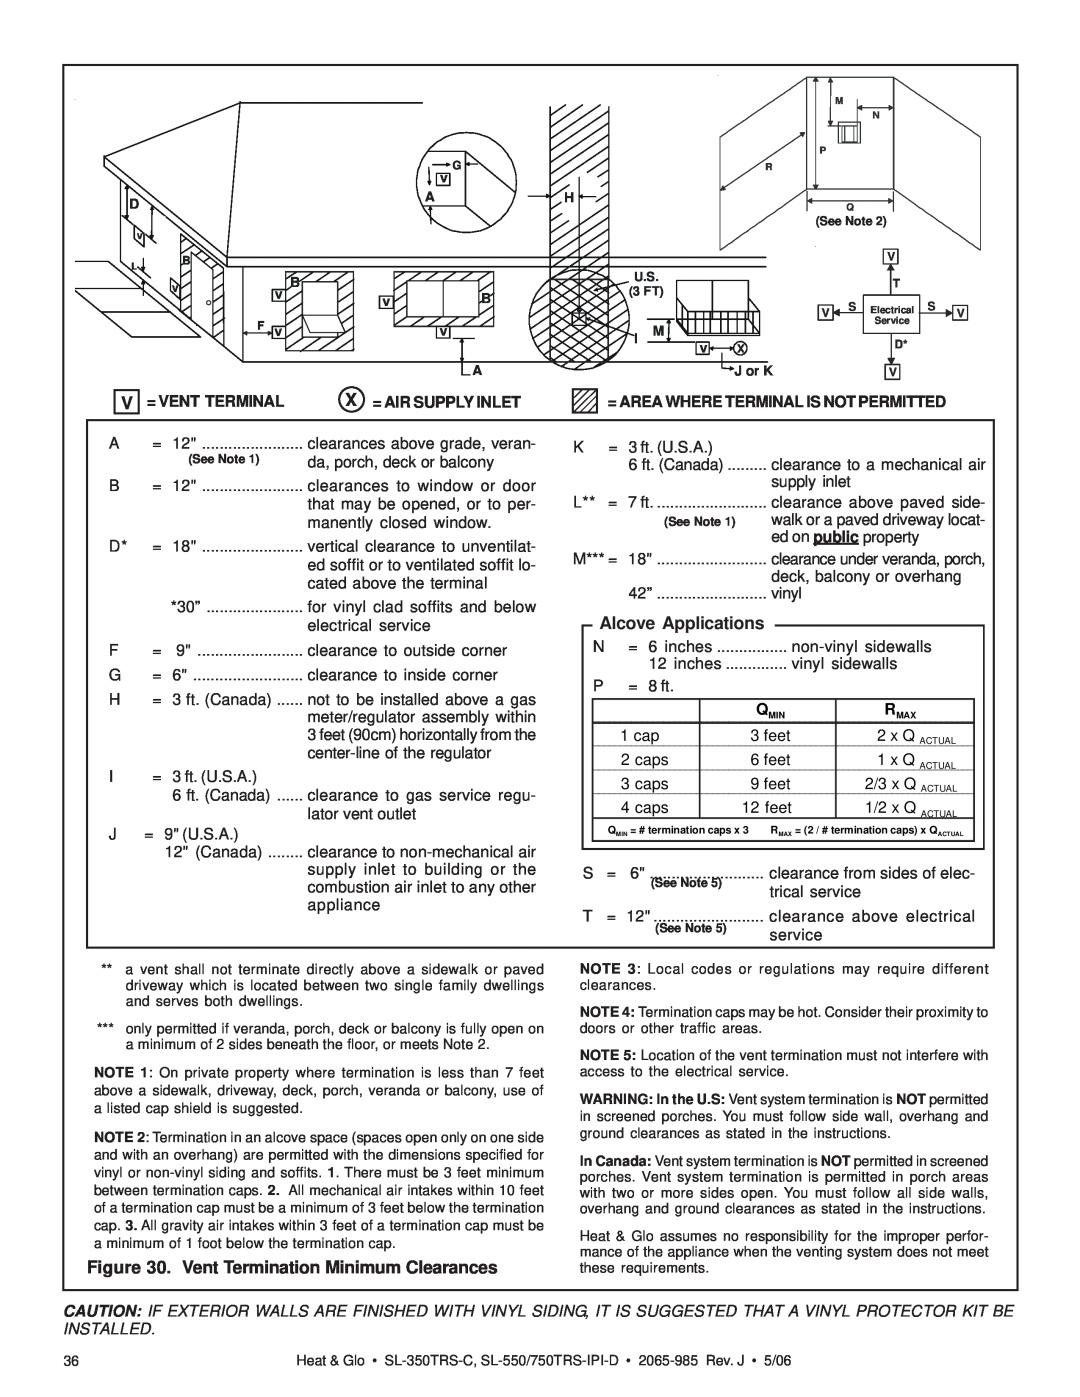 Heat & Glo LifeStyle SL-750TRS-IPI-D owner manual Alcove Applications, Vent Termination Minimum Clearances, = Vent Terminal 